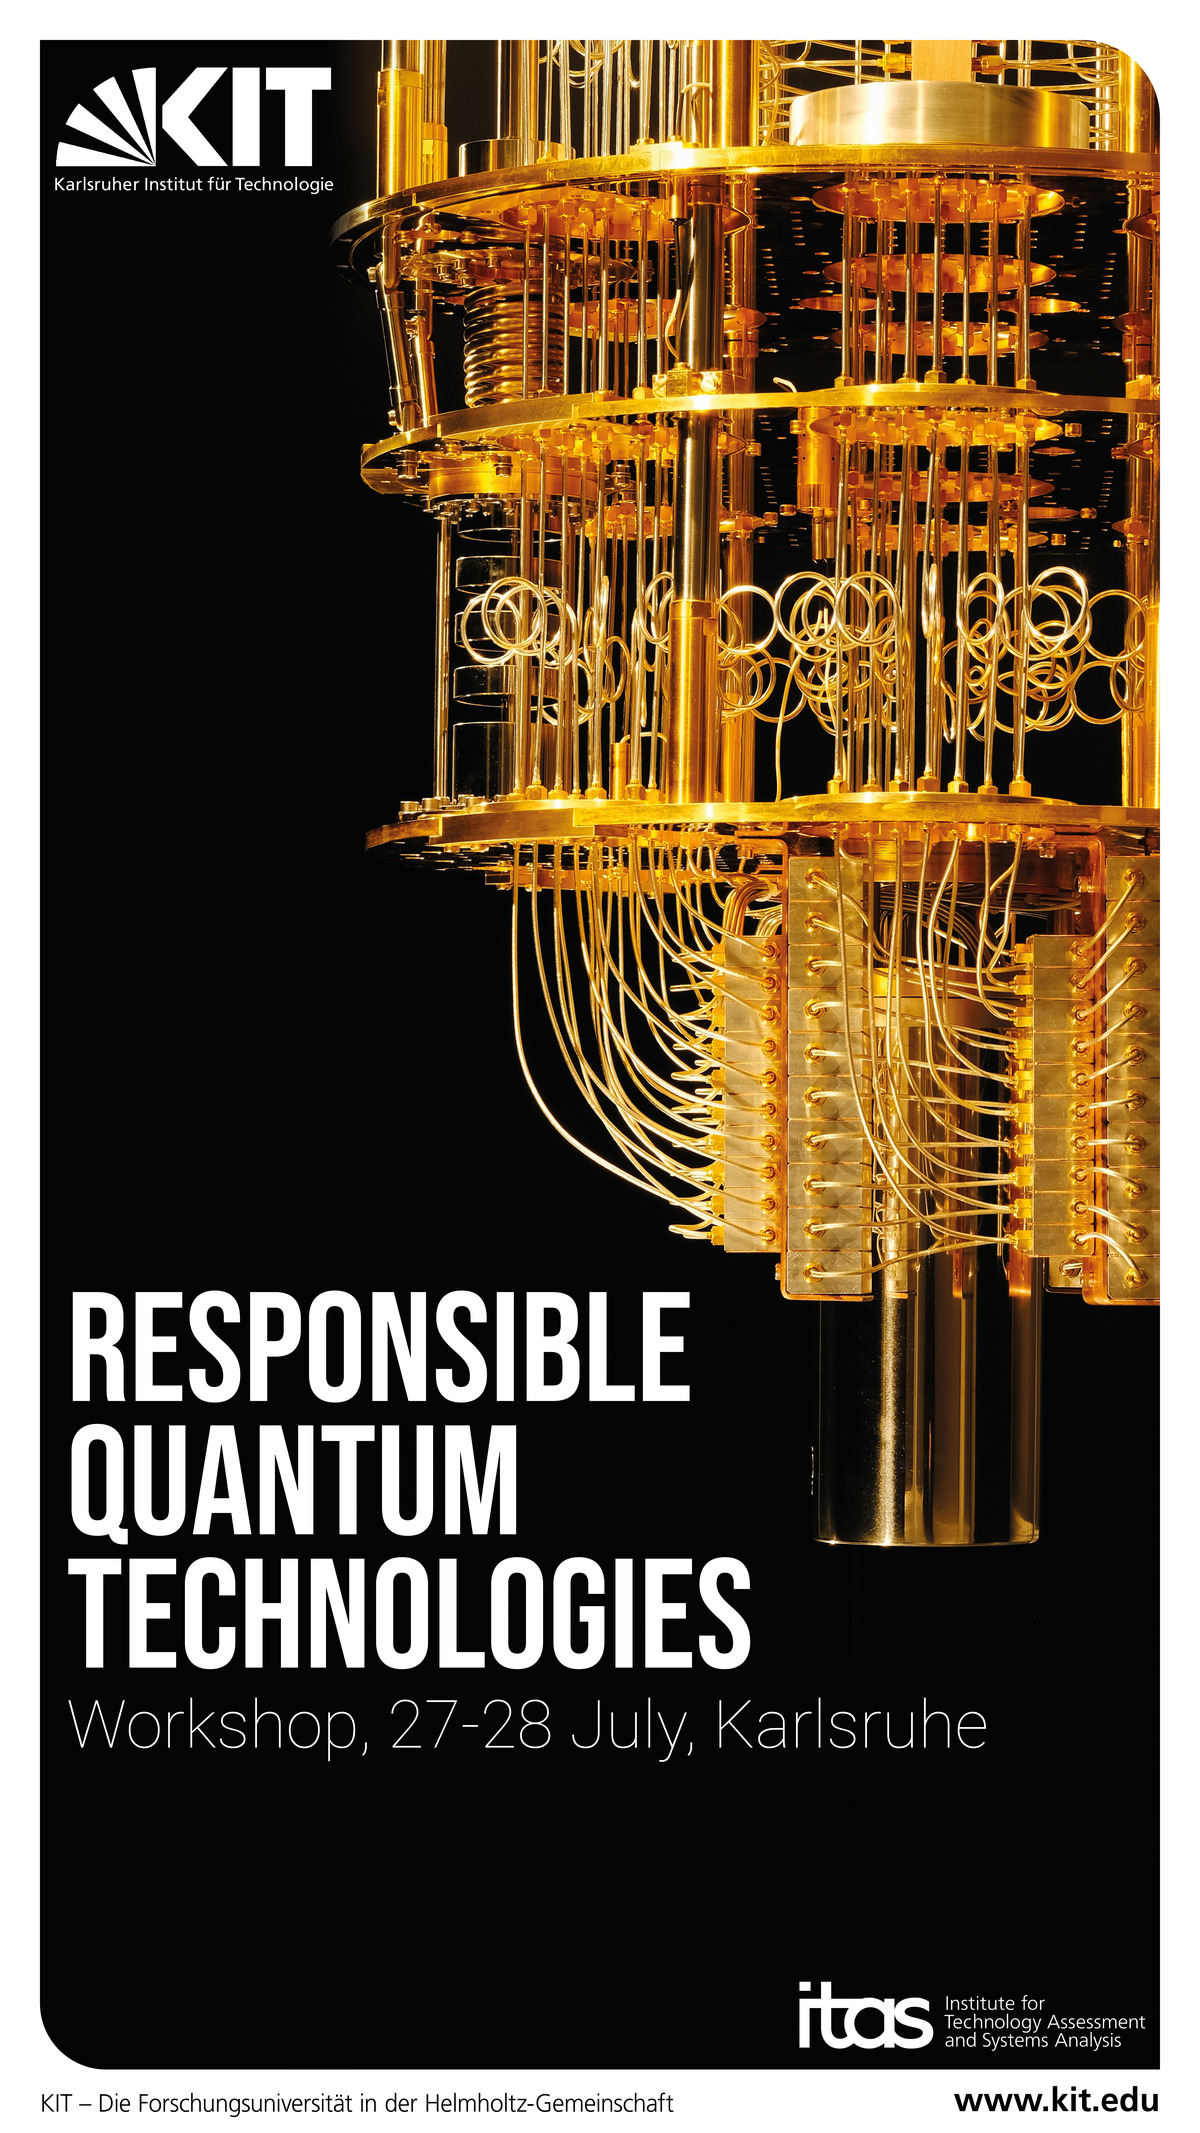 Responsible Quantum Technologies Workshop event poster